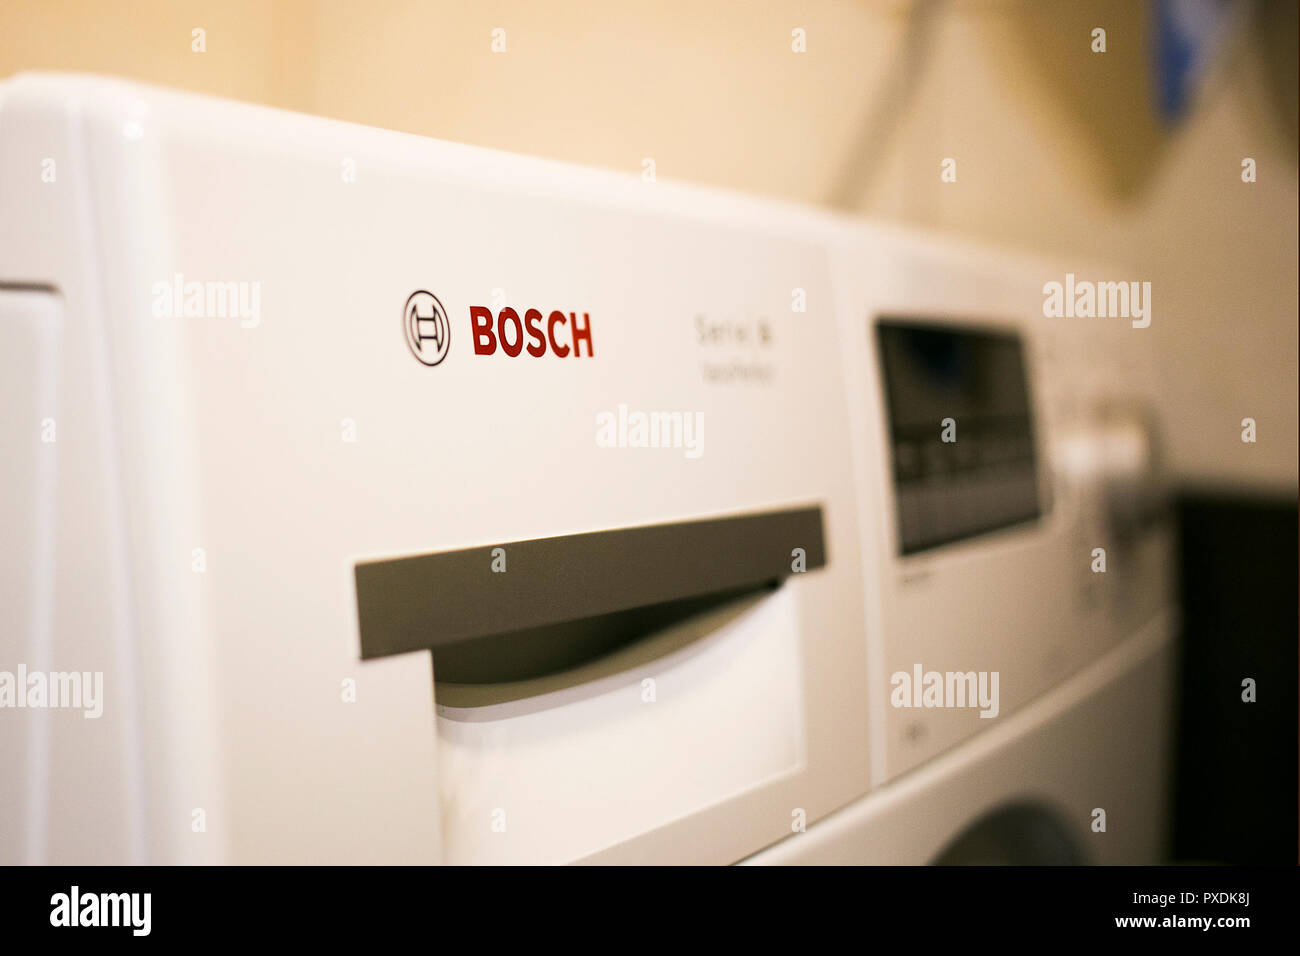 Bosch Waschmaschine logo Nahaufnahme Stockfoto